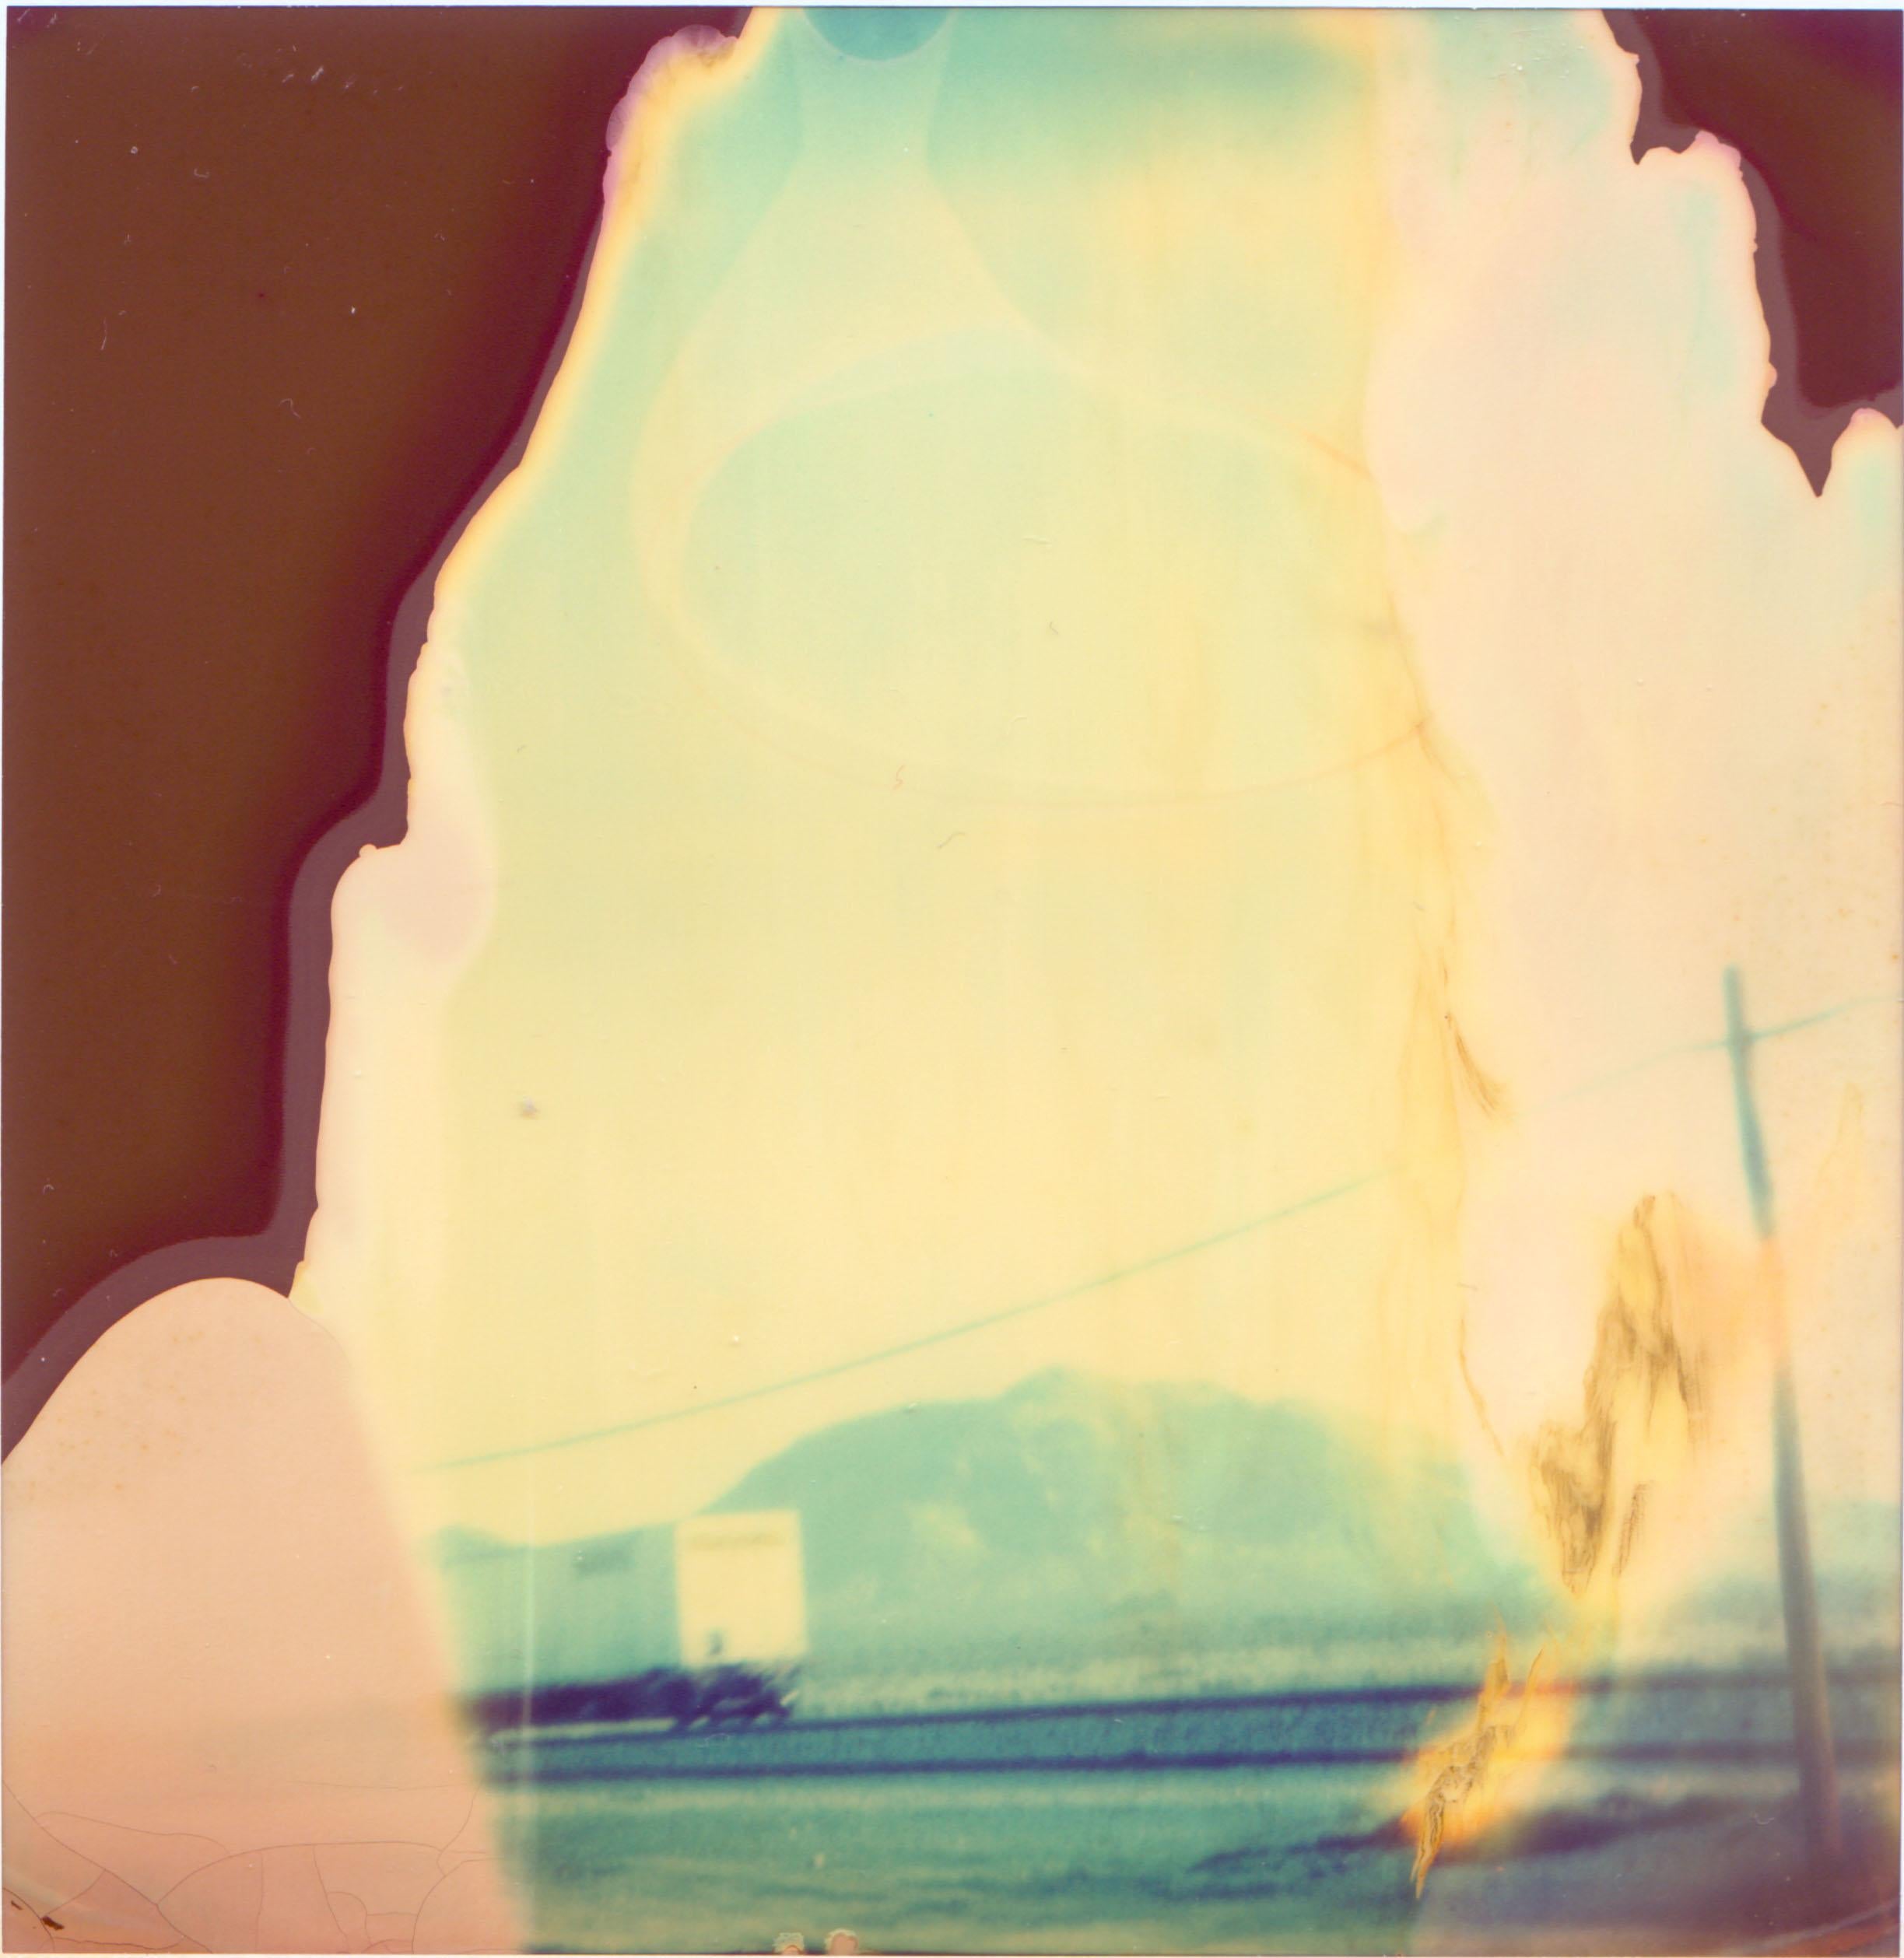 Stefanie Schneider Landscape Photograph - Untitled (Traintracks) - based on a Polaroid